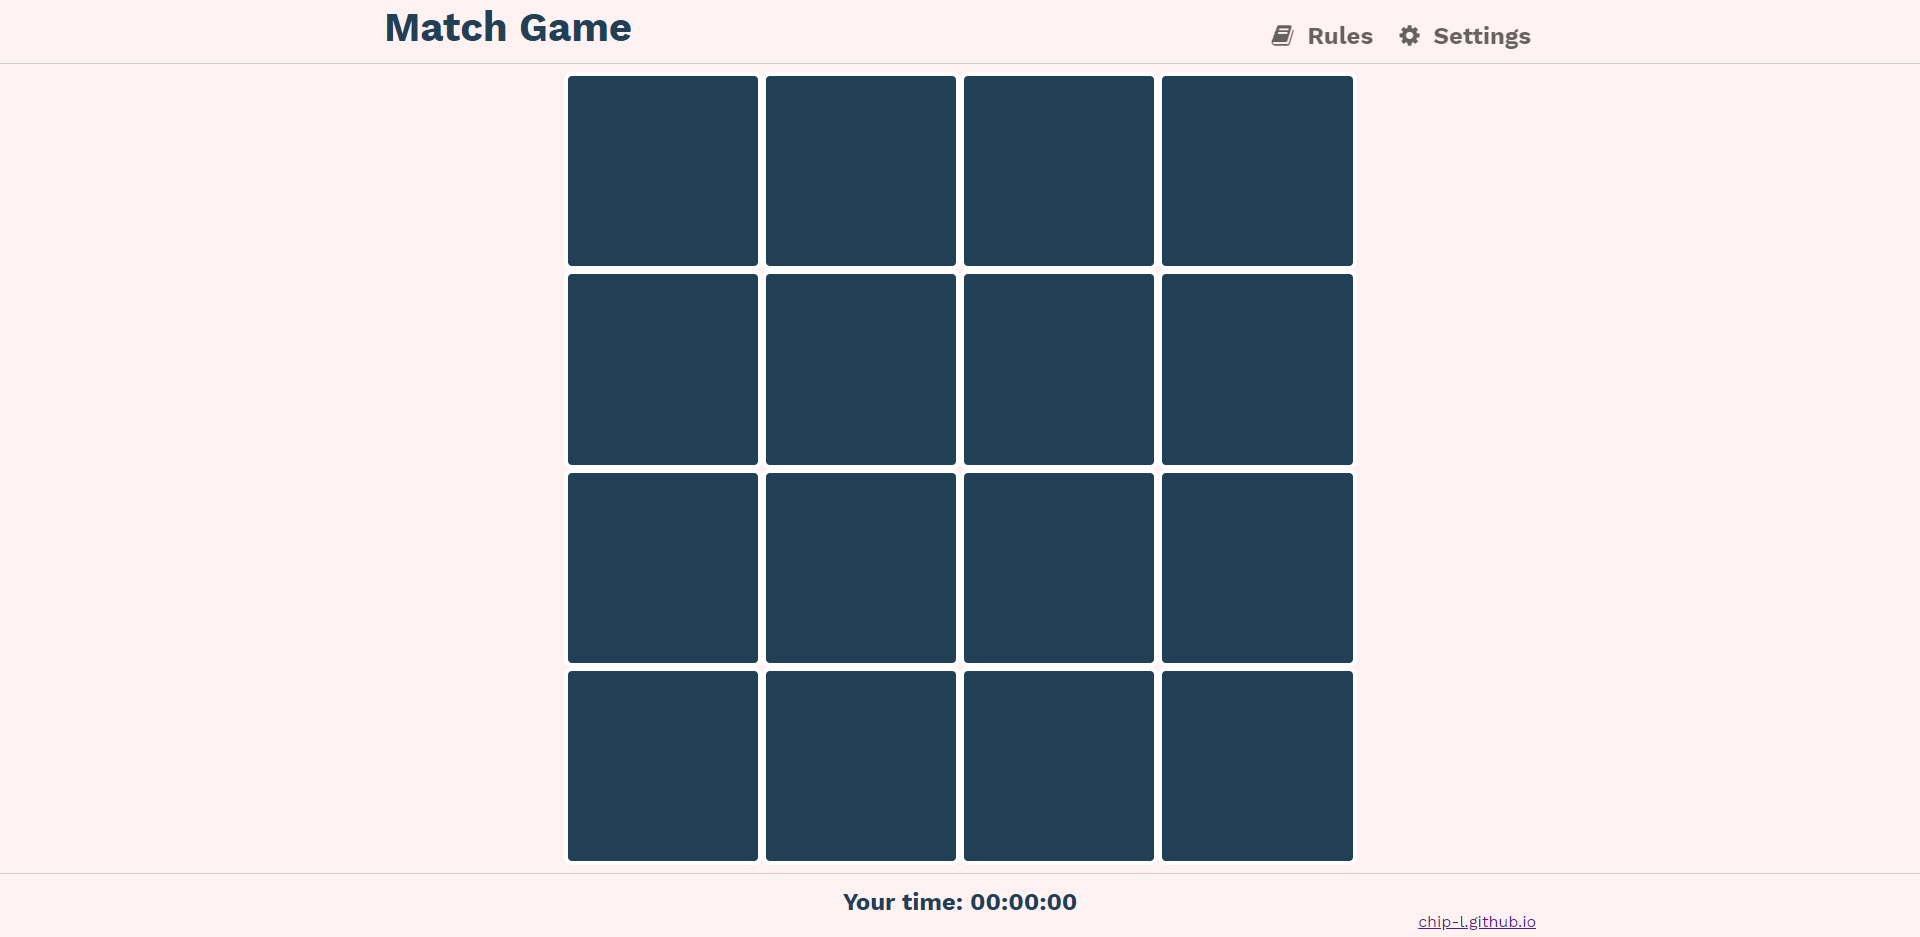 Match Game webpage image